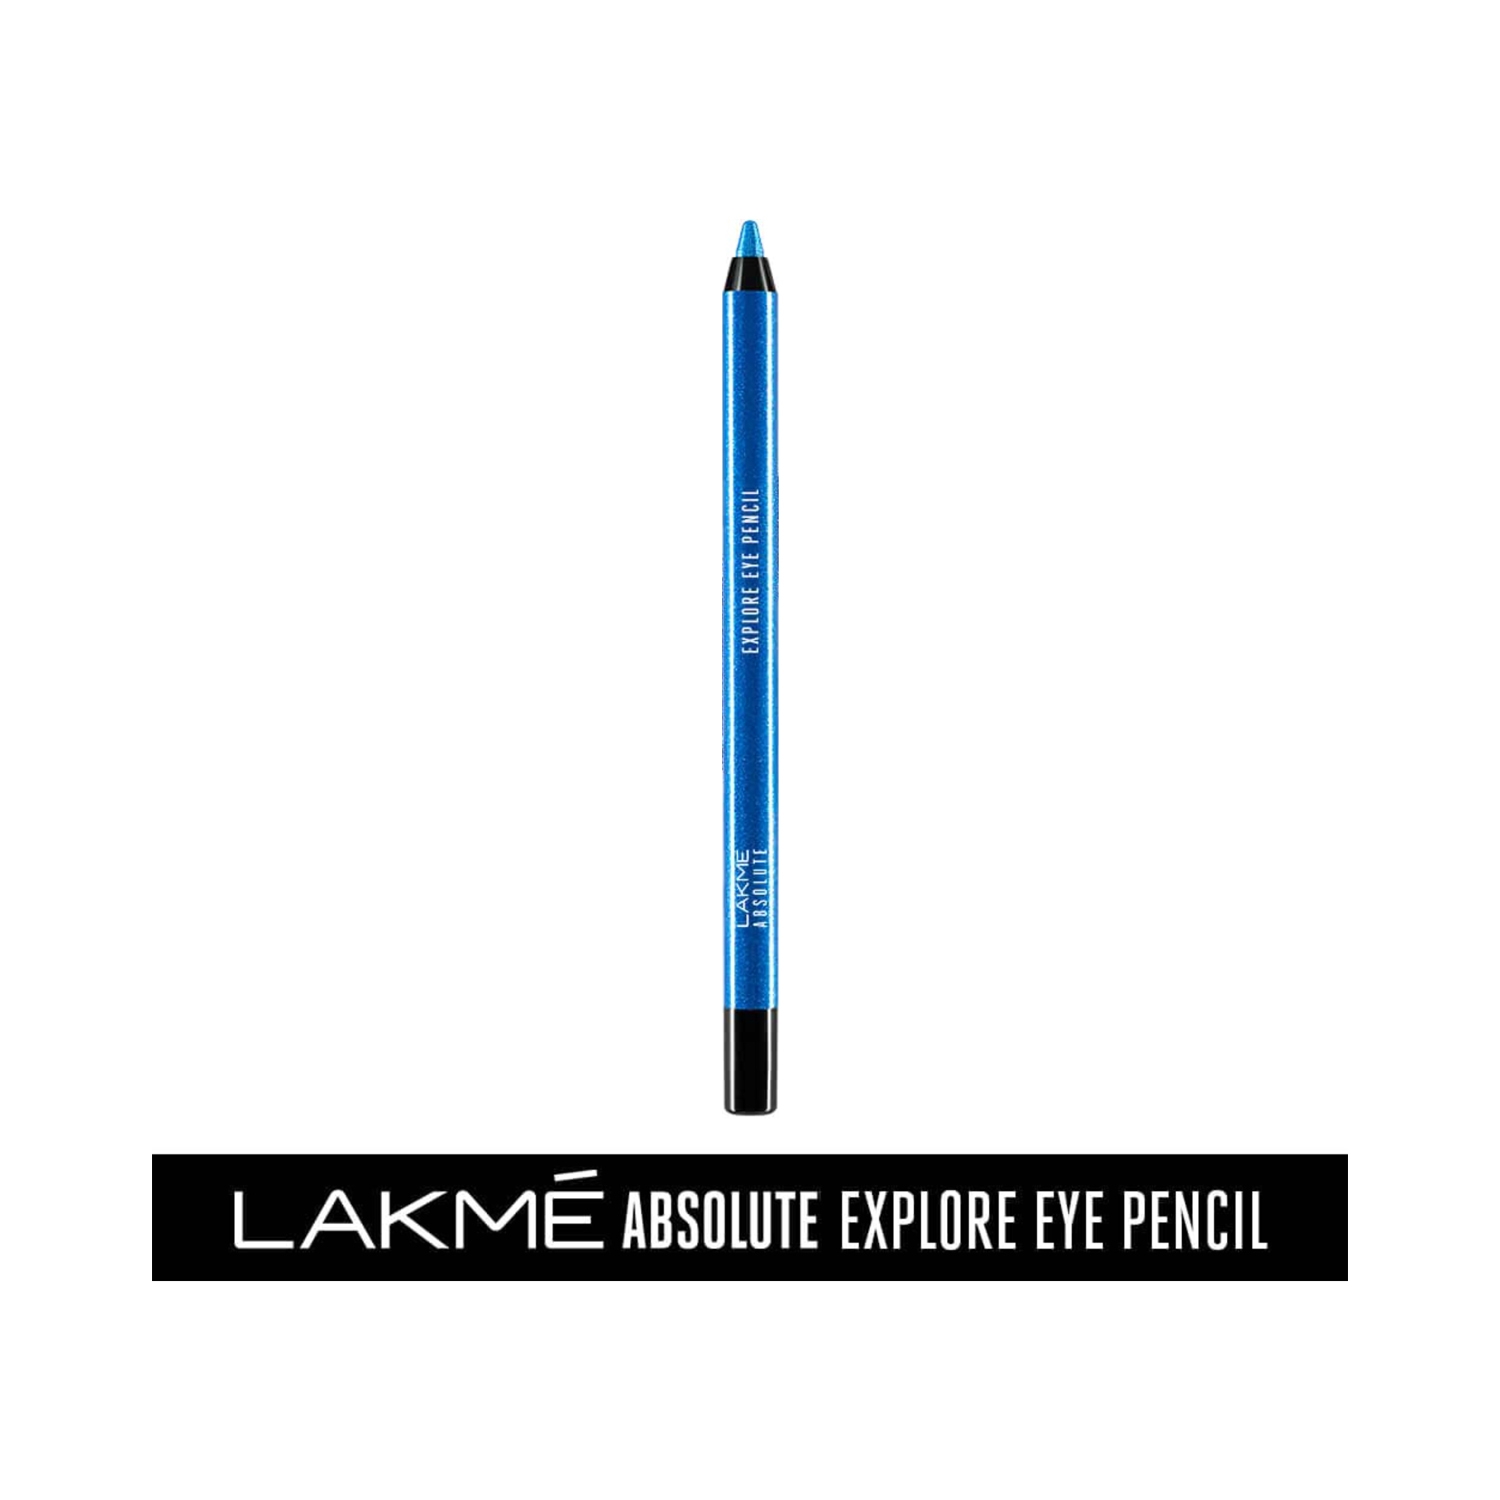 Lakme | Lakme Absolute Explore Eye Pencil - Darling Blue (1.2g)